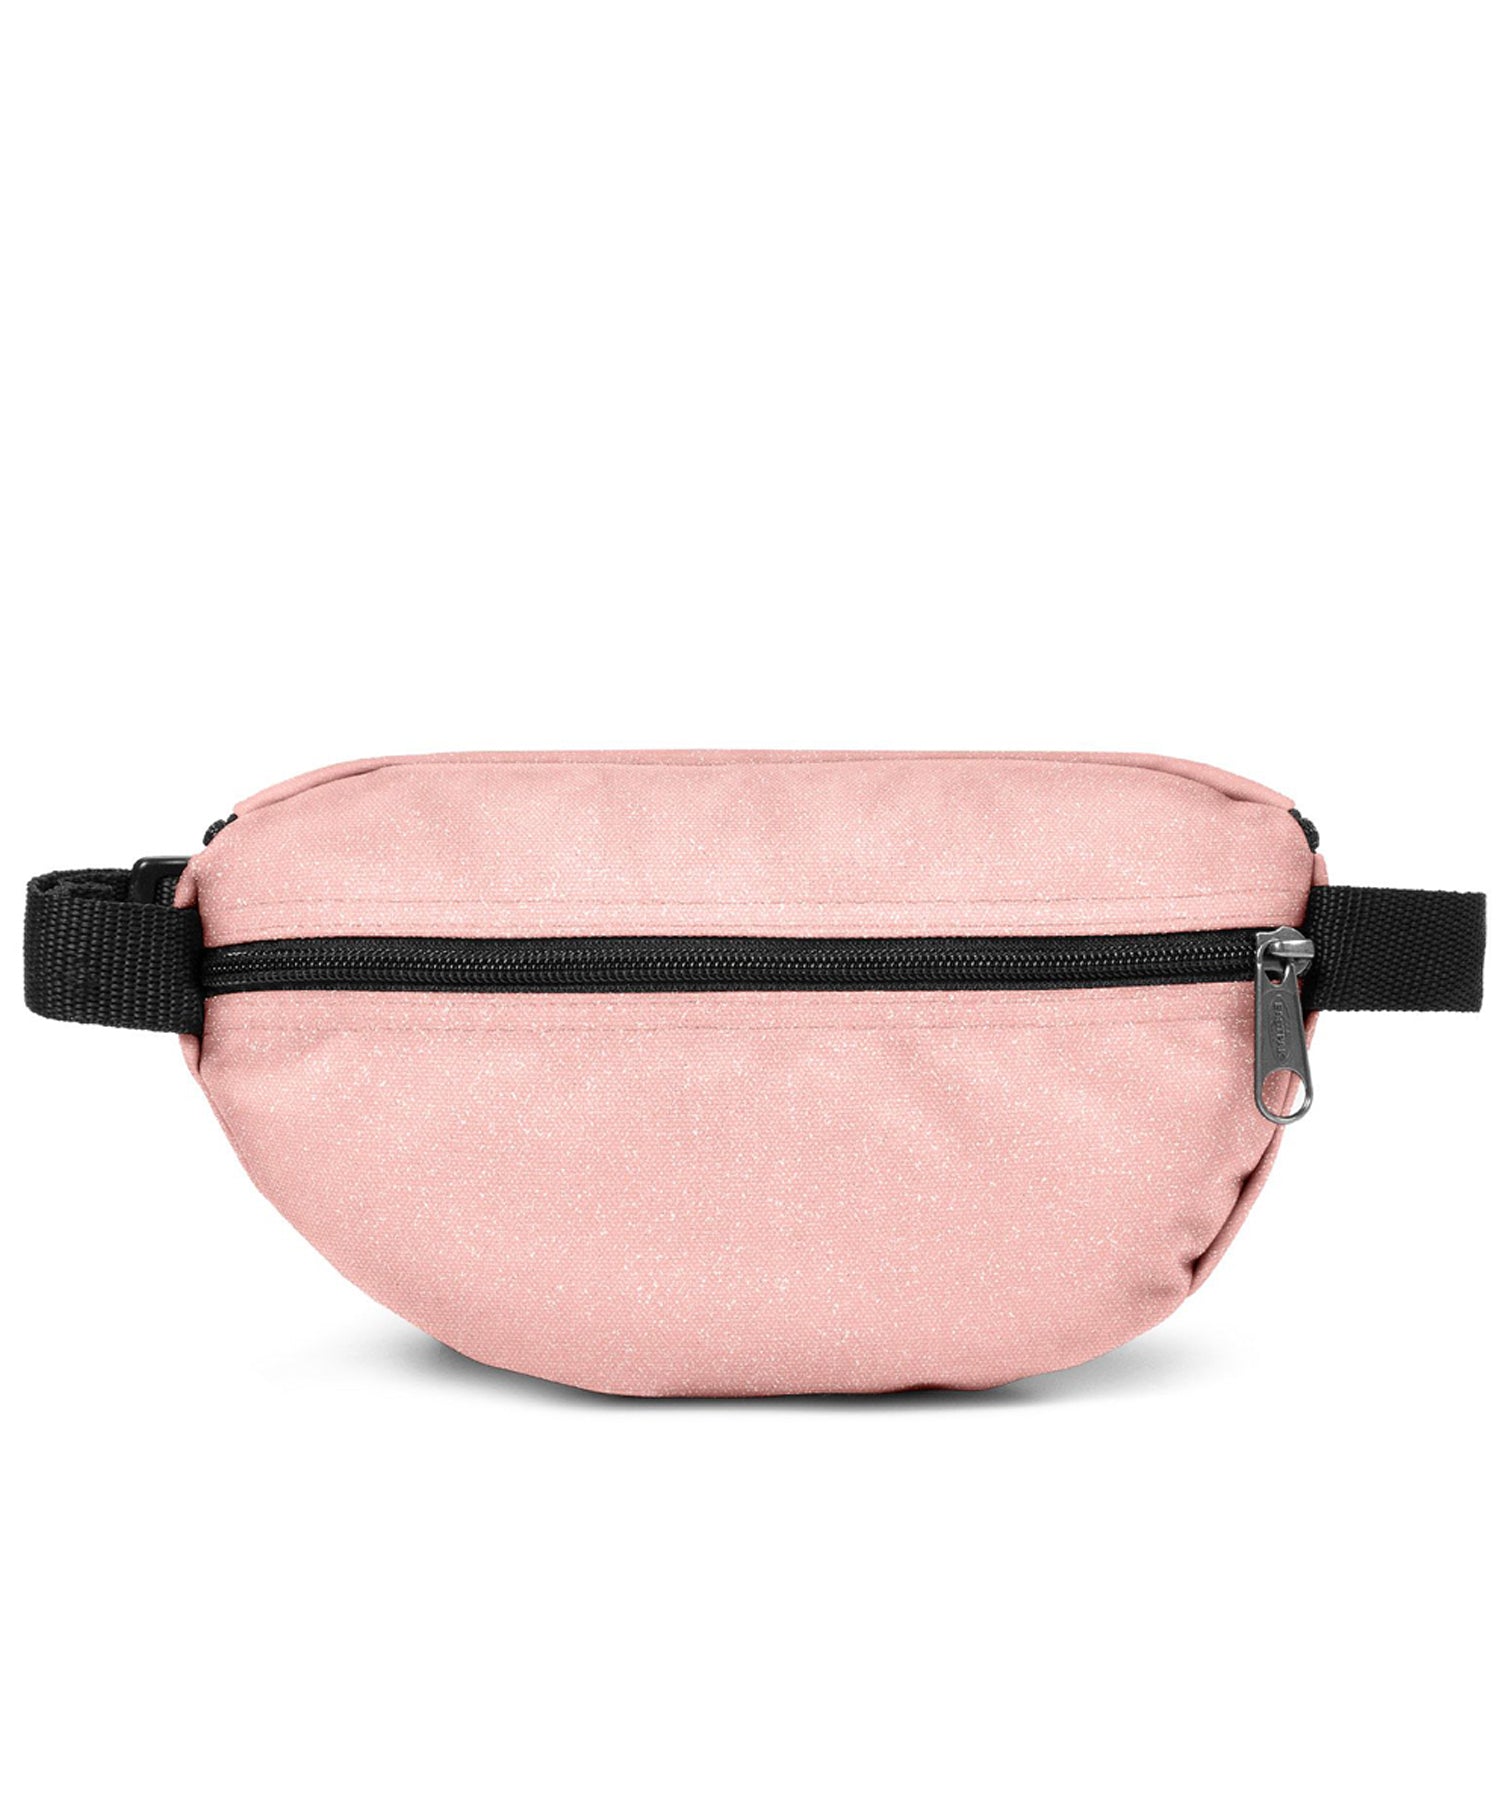 eastpak -springer riñonera SPARK-ROSE -color rosa-bolsillo trasero-cierre cremallera-producto impermeable y vegano.